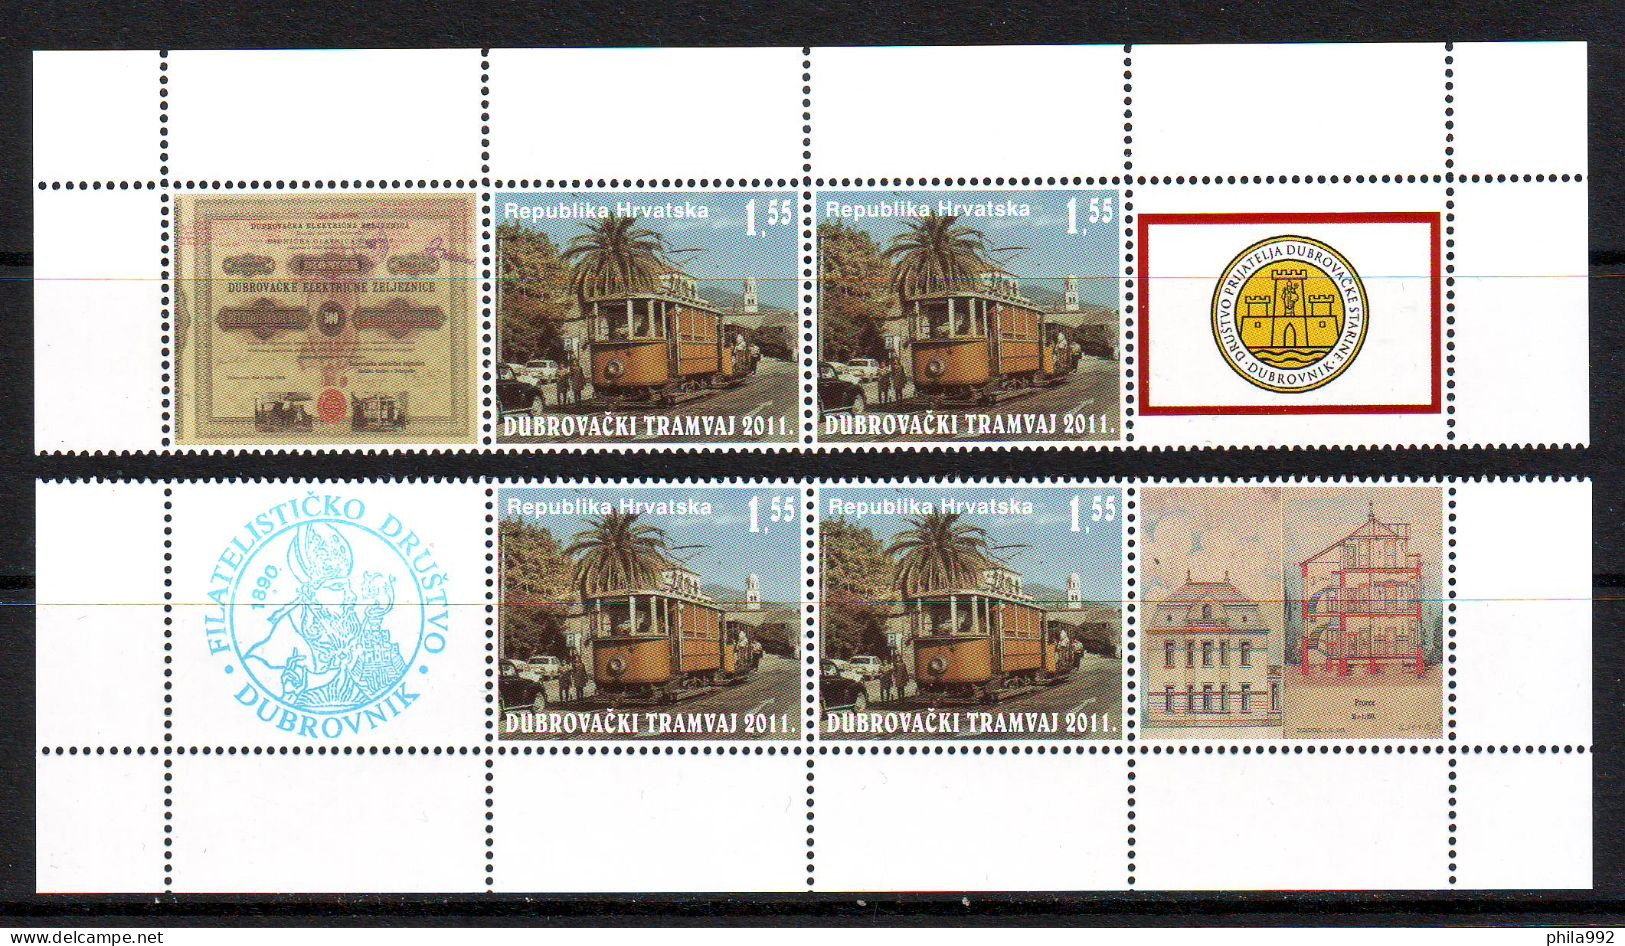 Croatia 2011 Charity Stamp Dubrovnik Tram (4stamps + 4 Labels) MNH - Croatia